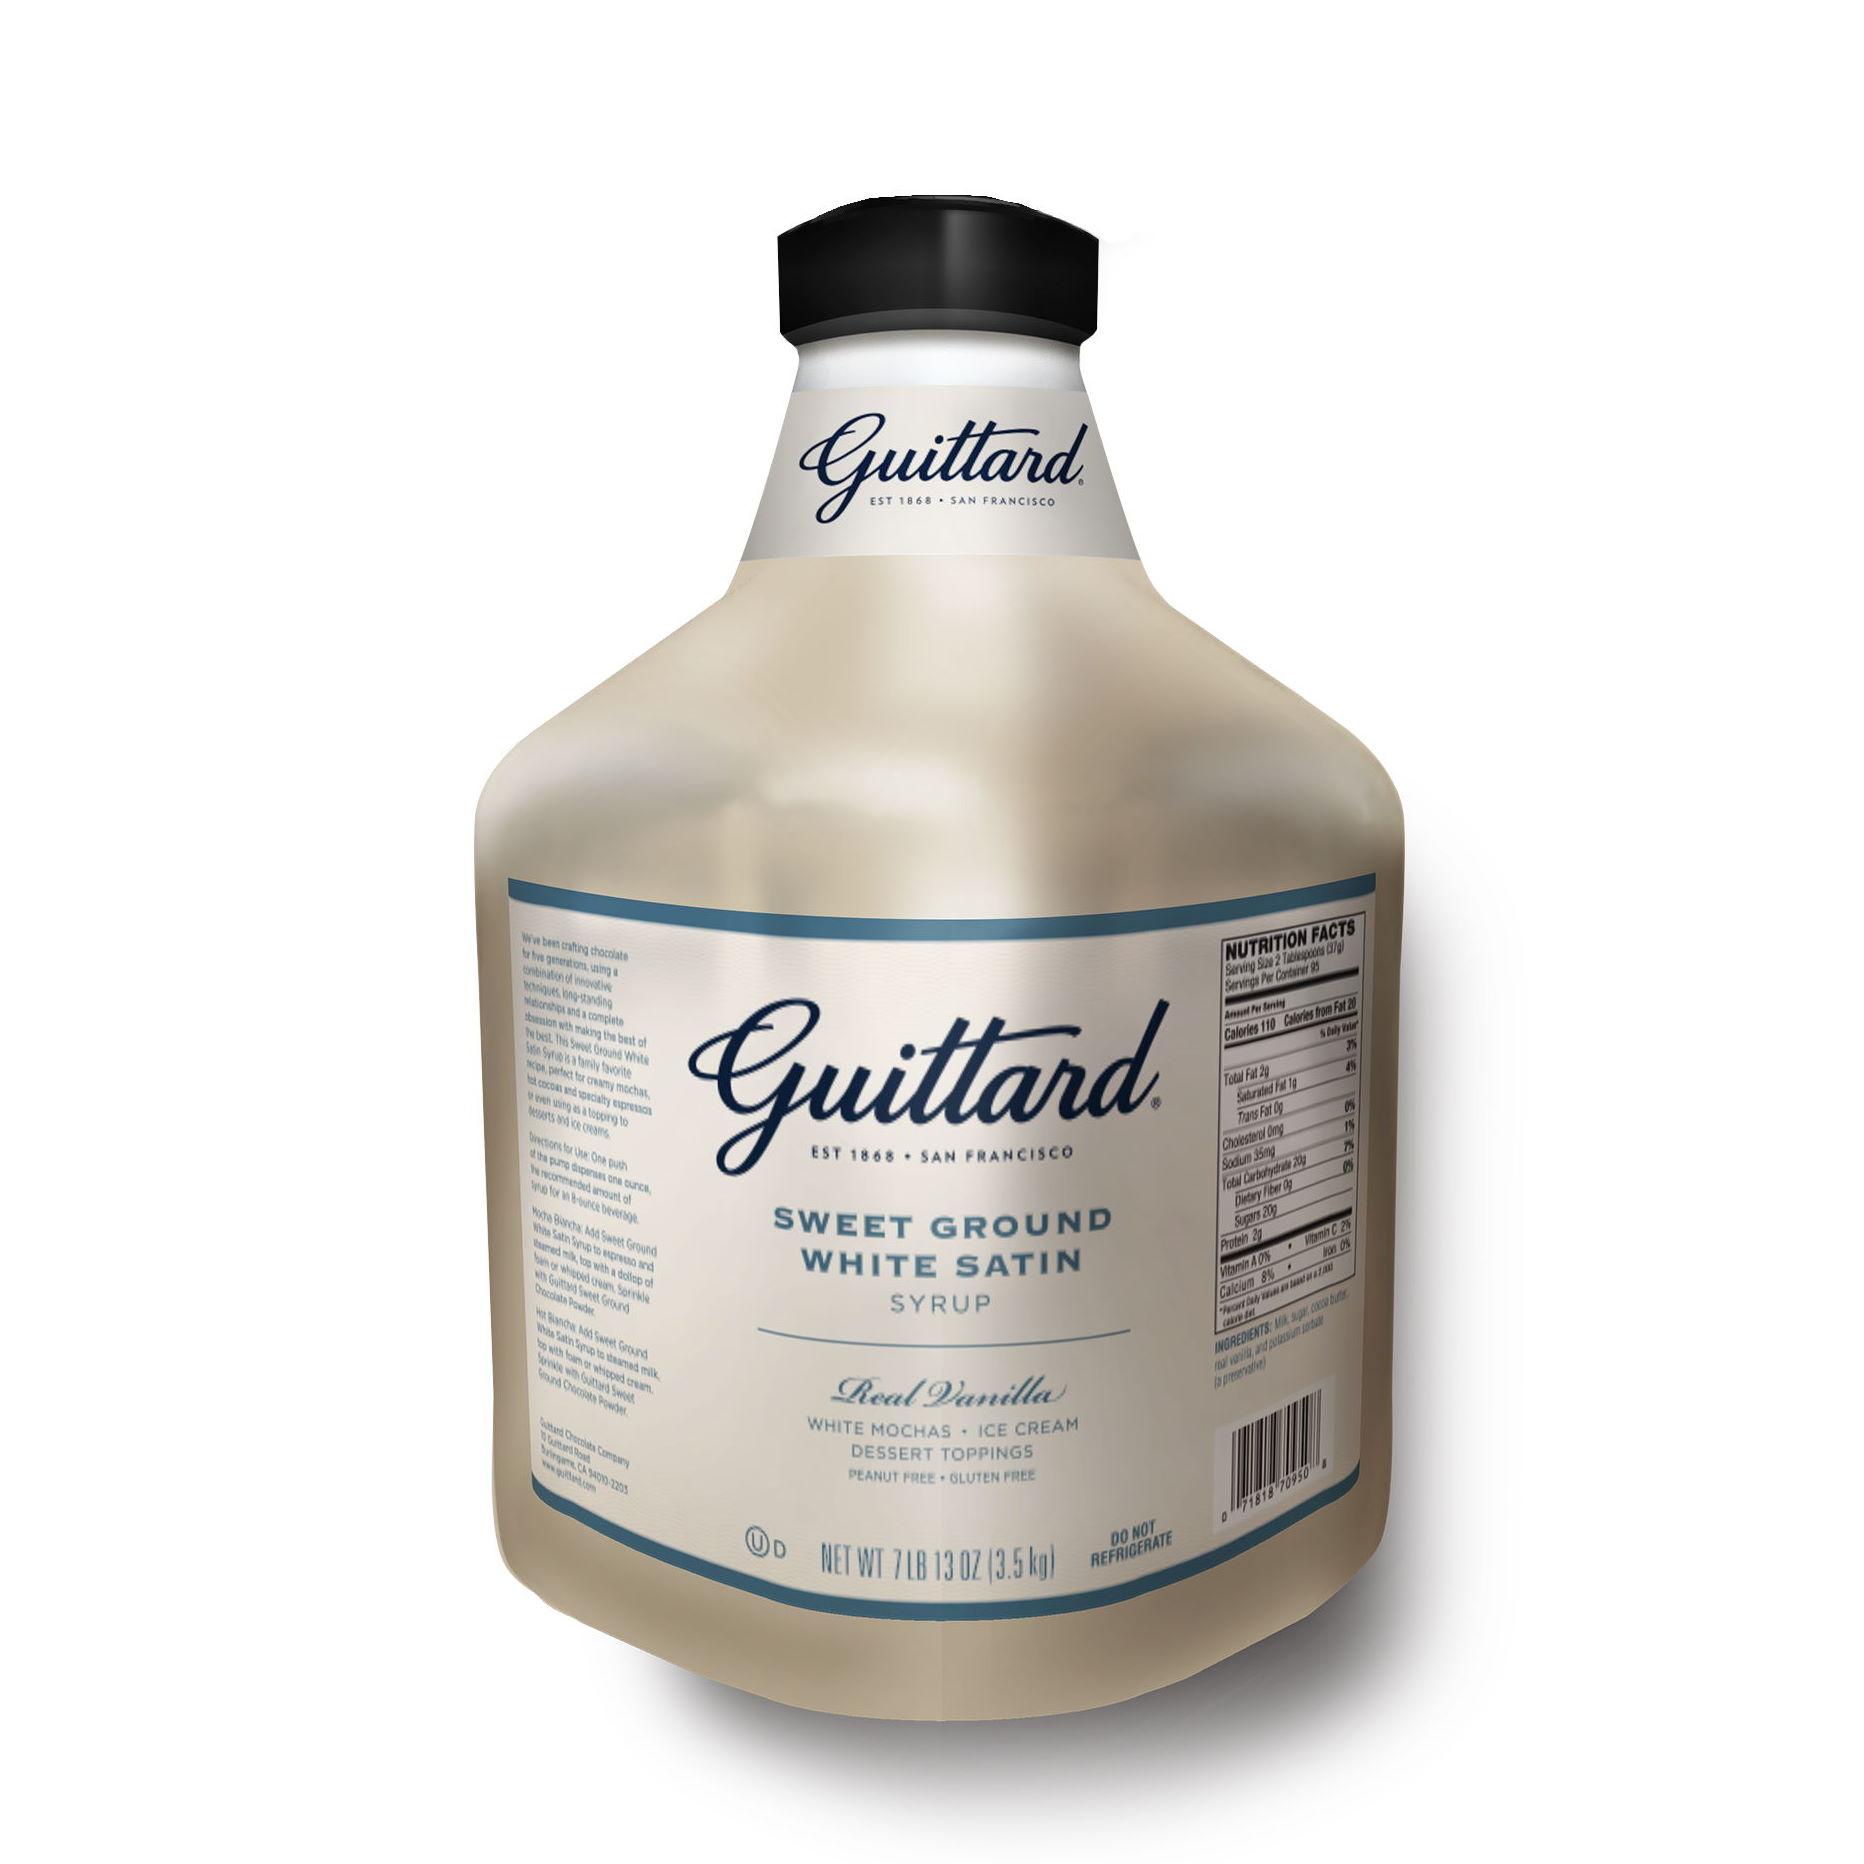 Guittard Sweet Ground White Satin Syrup